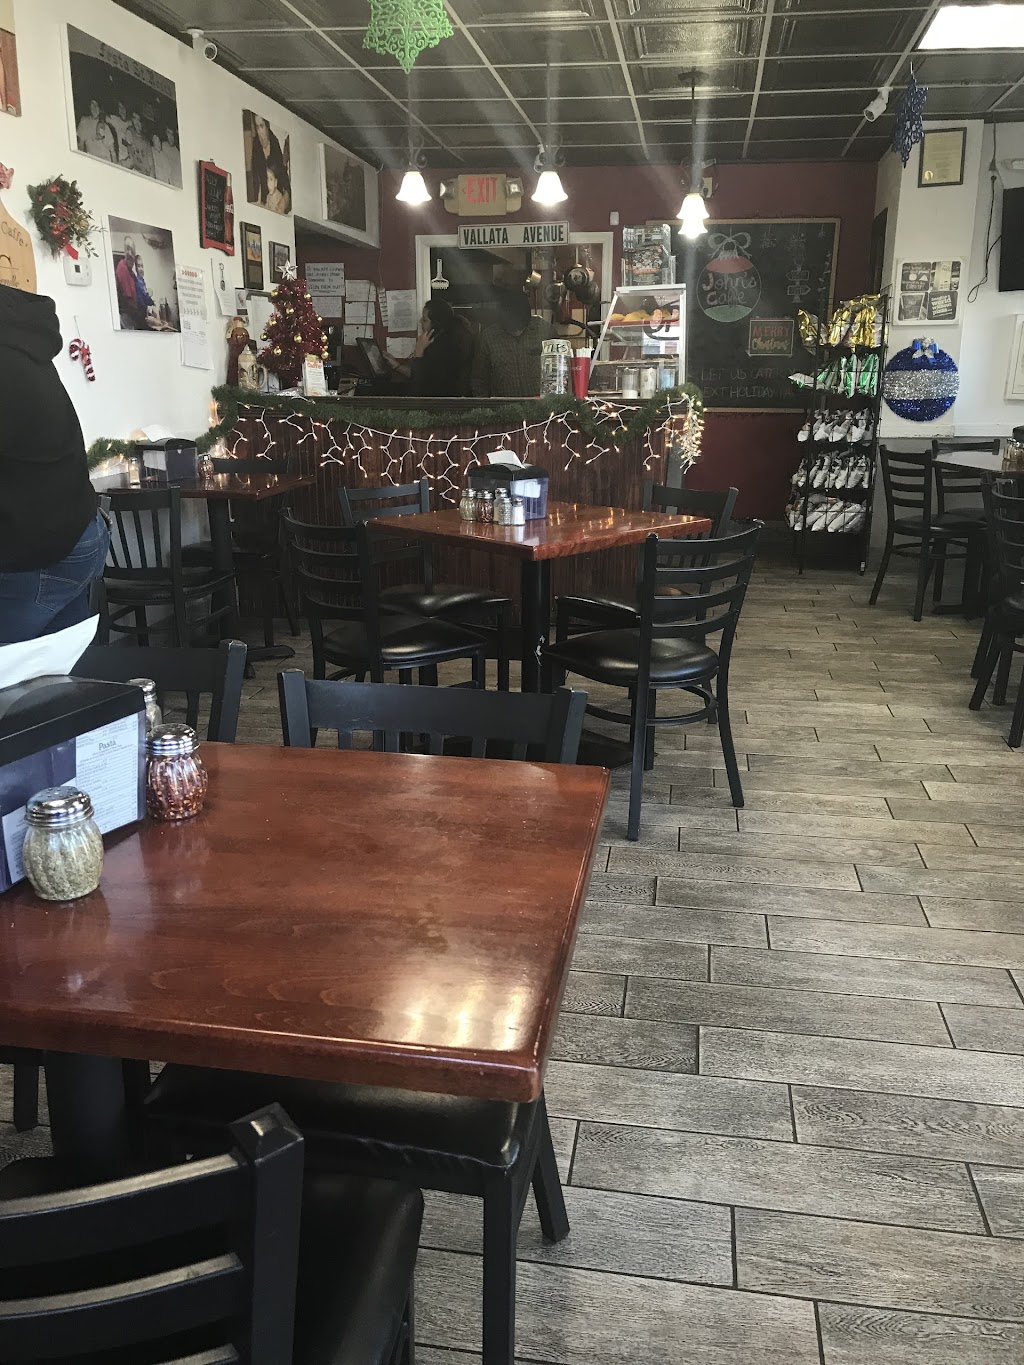 Johns Caffe Pizza & Caterers | 574 2nd Ave, Elizabeth, NJ 07202 | Phone: (908) 354-5260